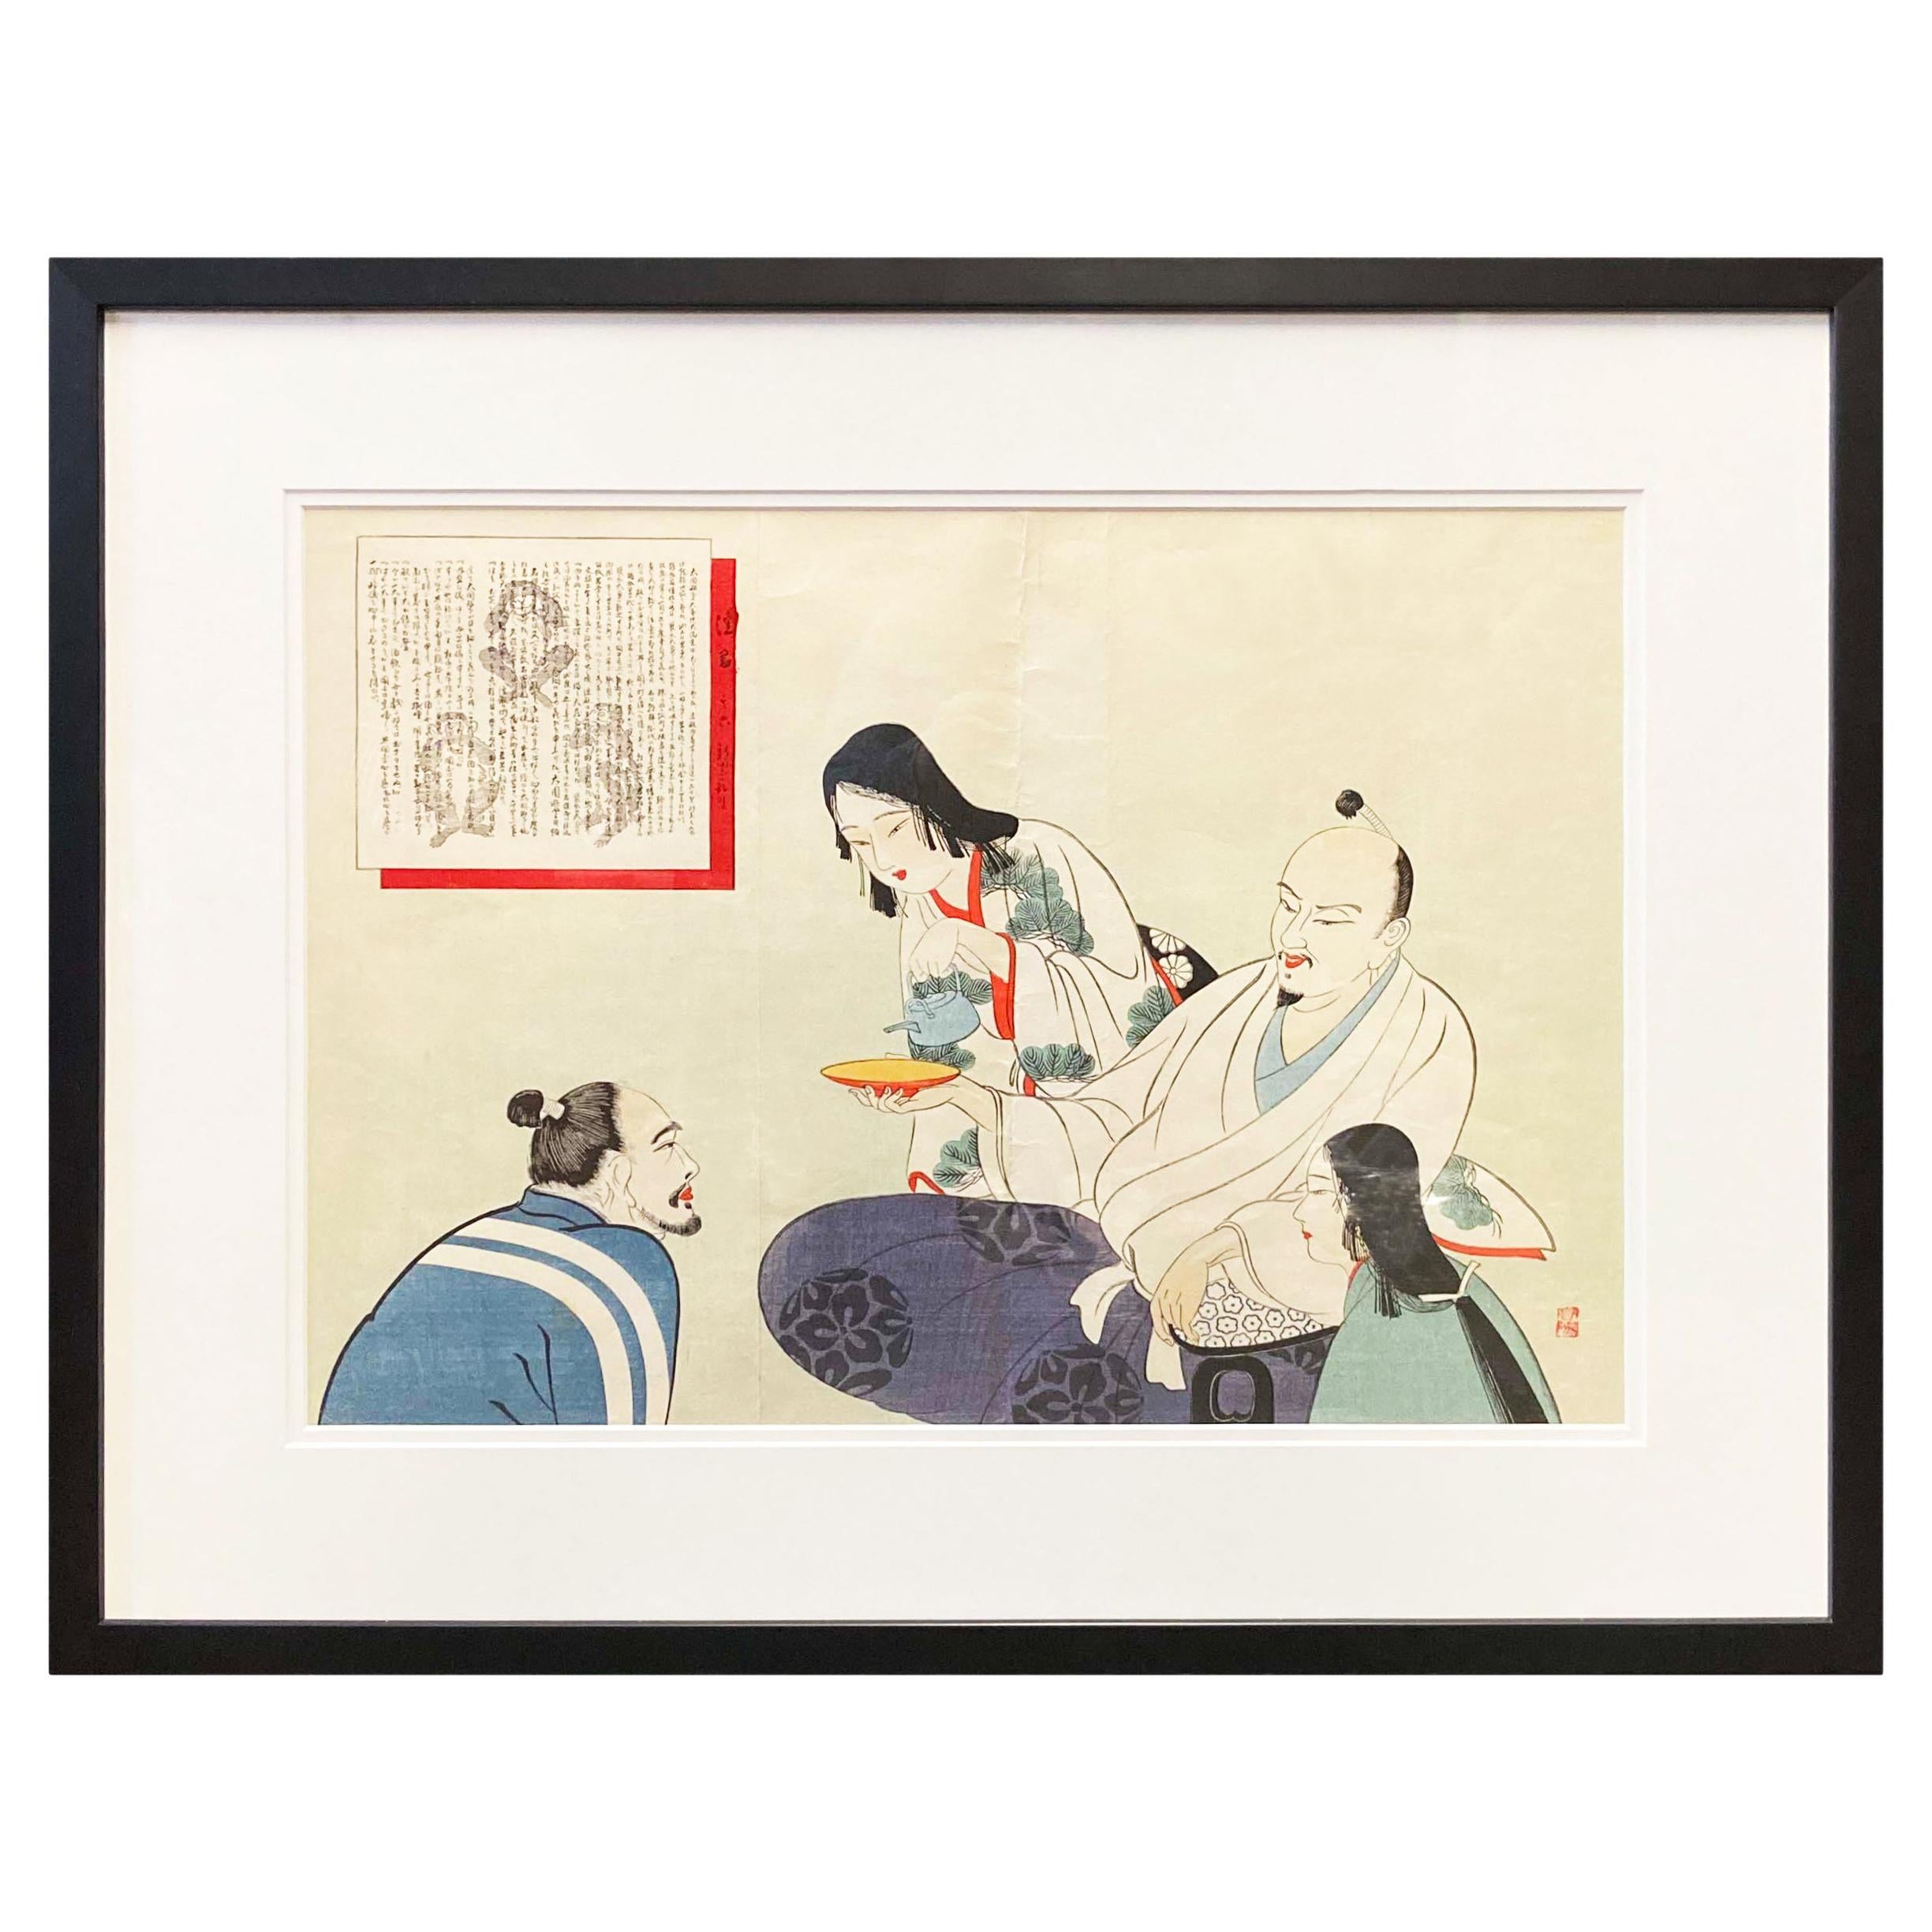 19th Century Japanese Woodblock Print Depicting Monks Having Tea, in Black Frame For Sale